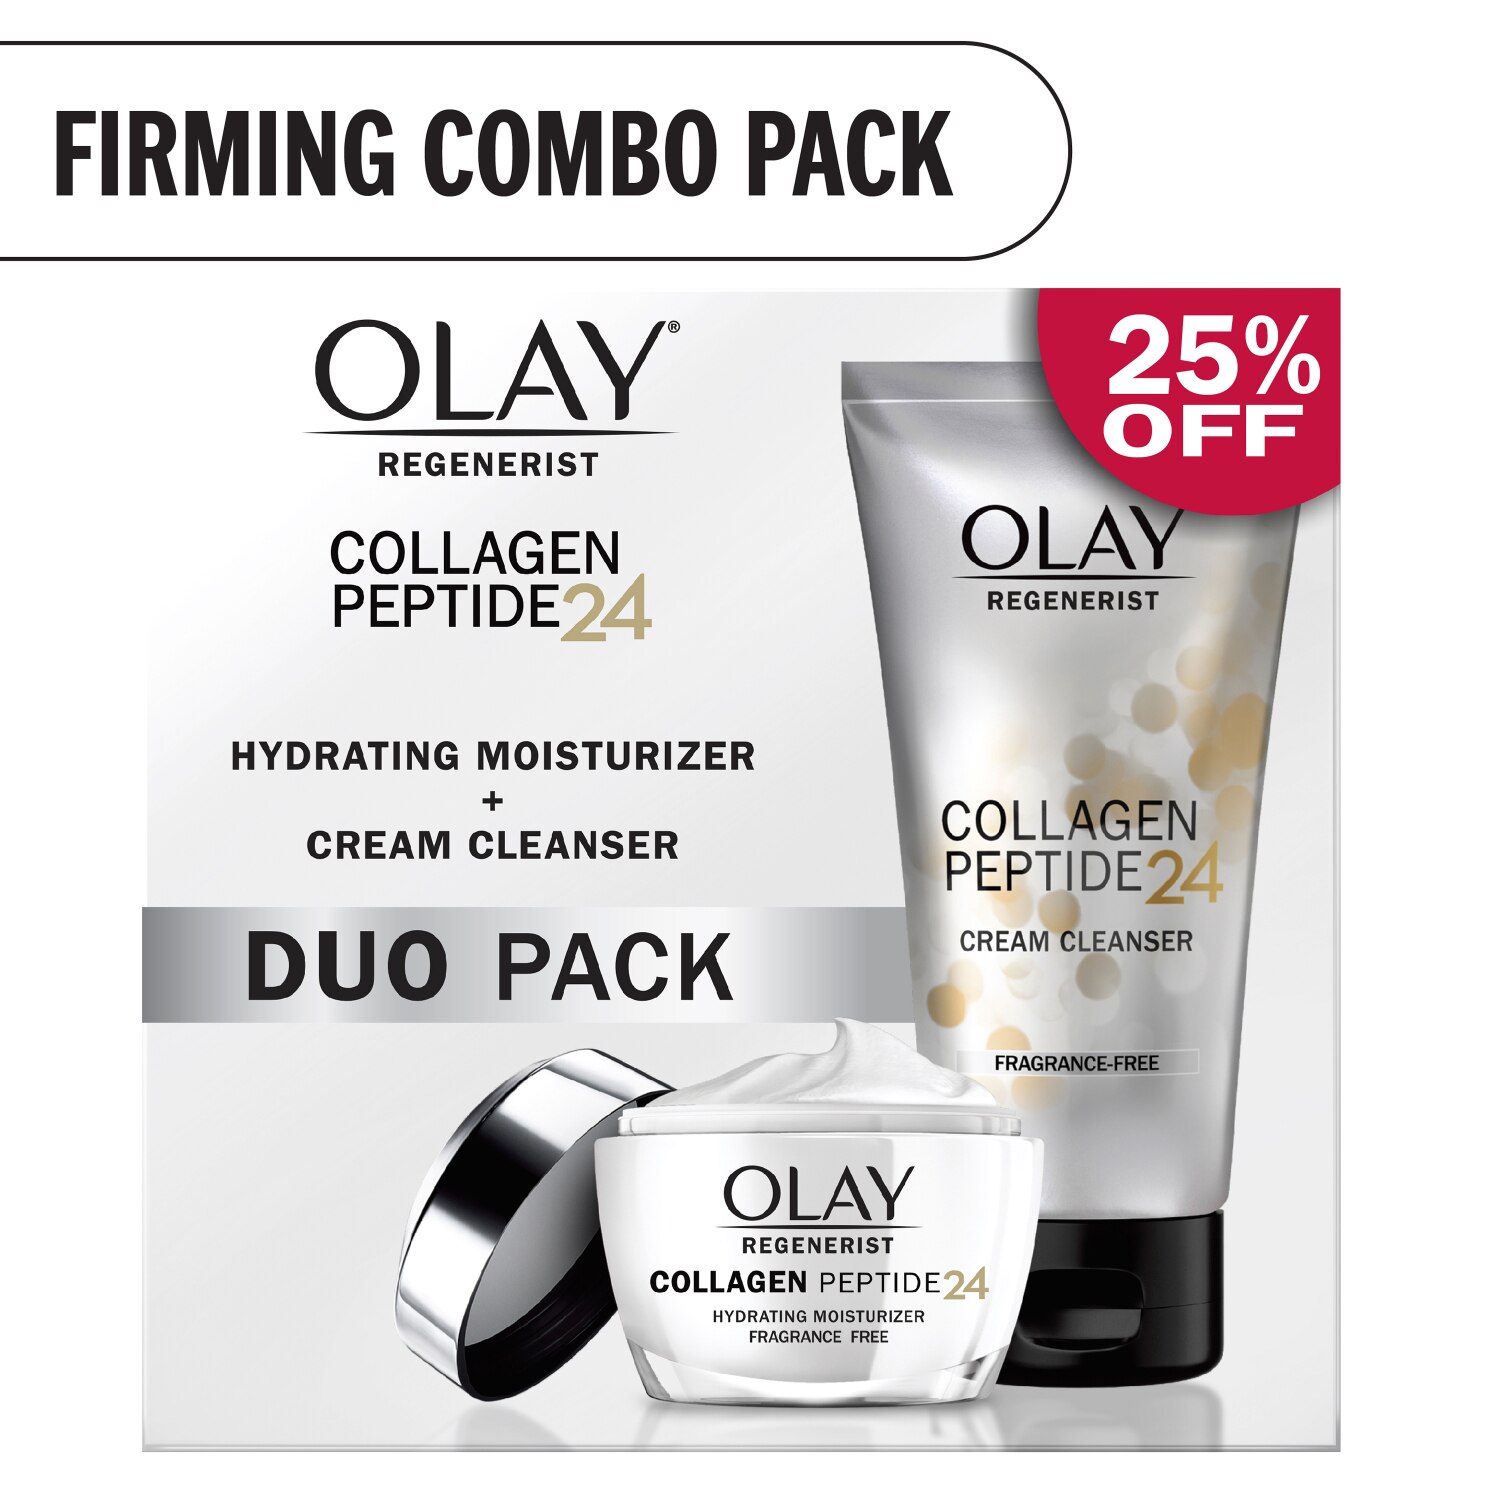 Olay Regenerist Collagen Peptide 24 Face Wash + Moisturizer Duo Pack